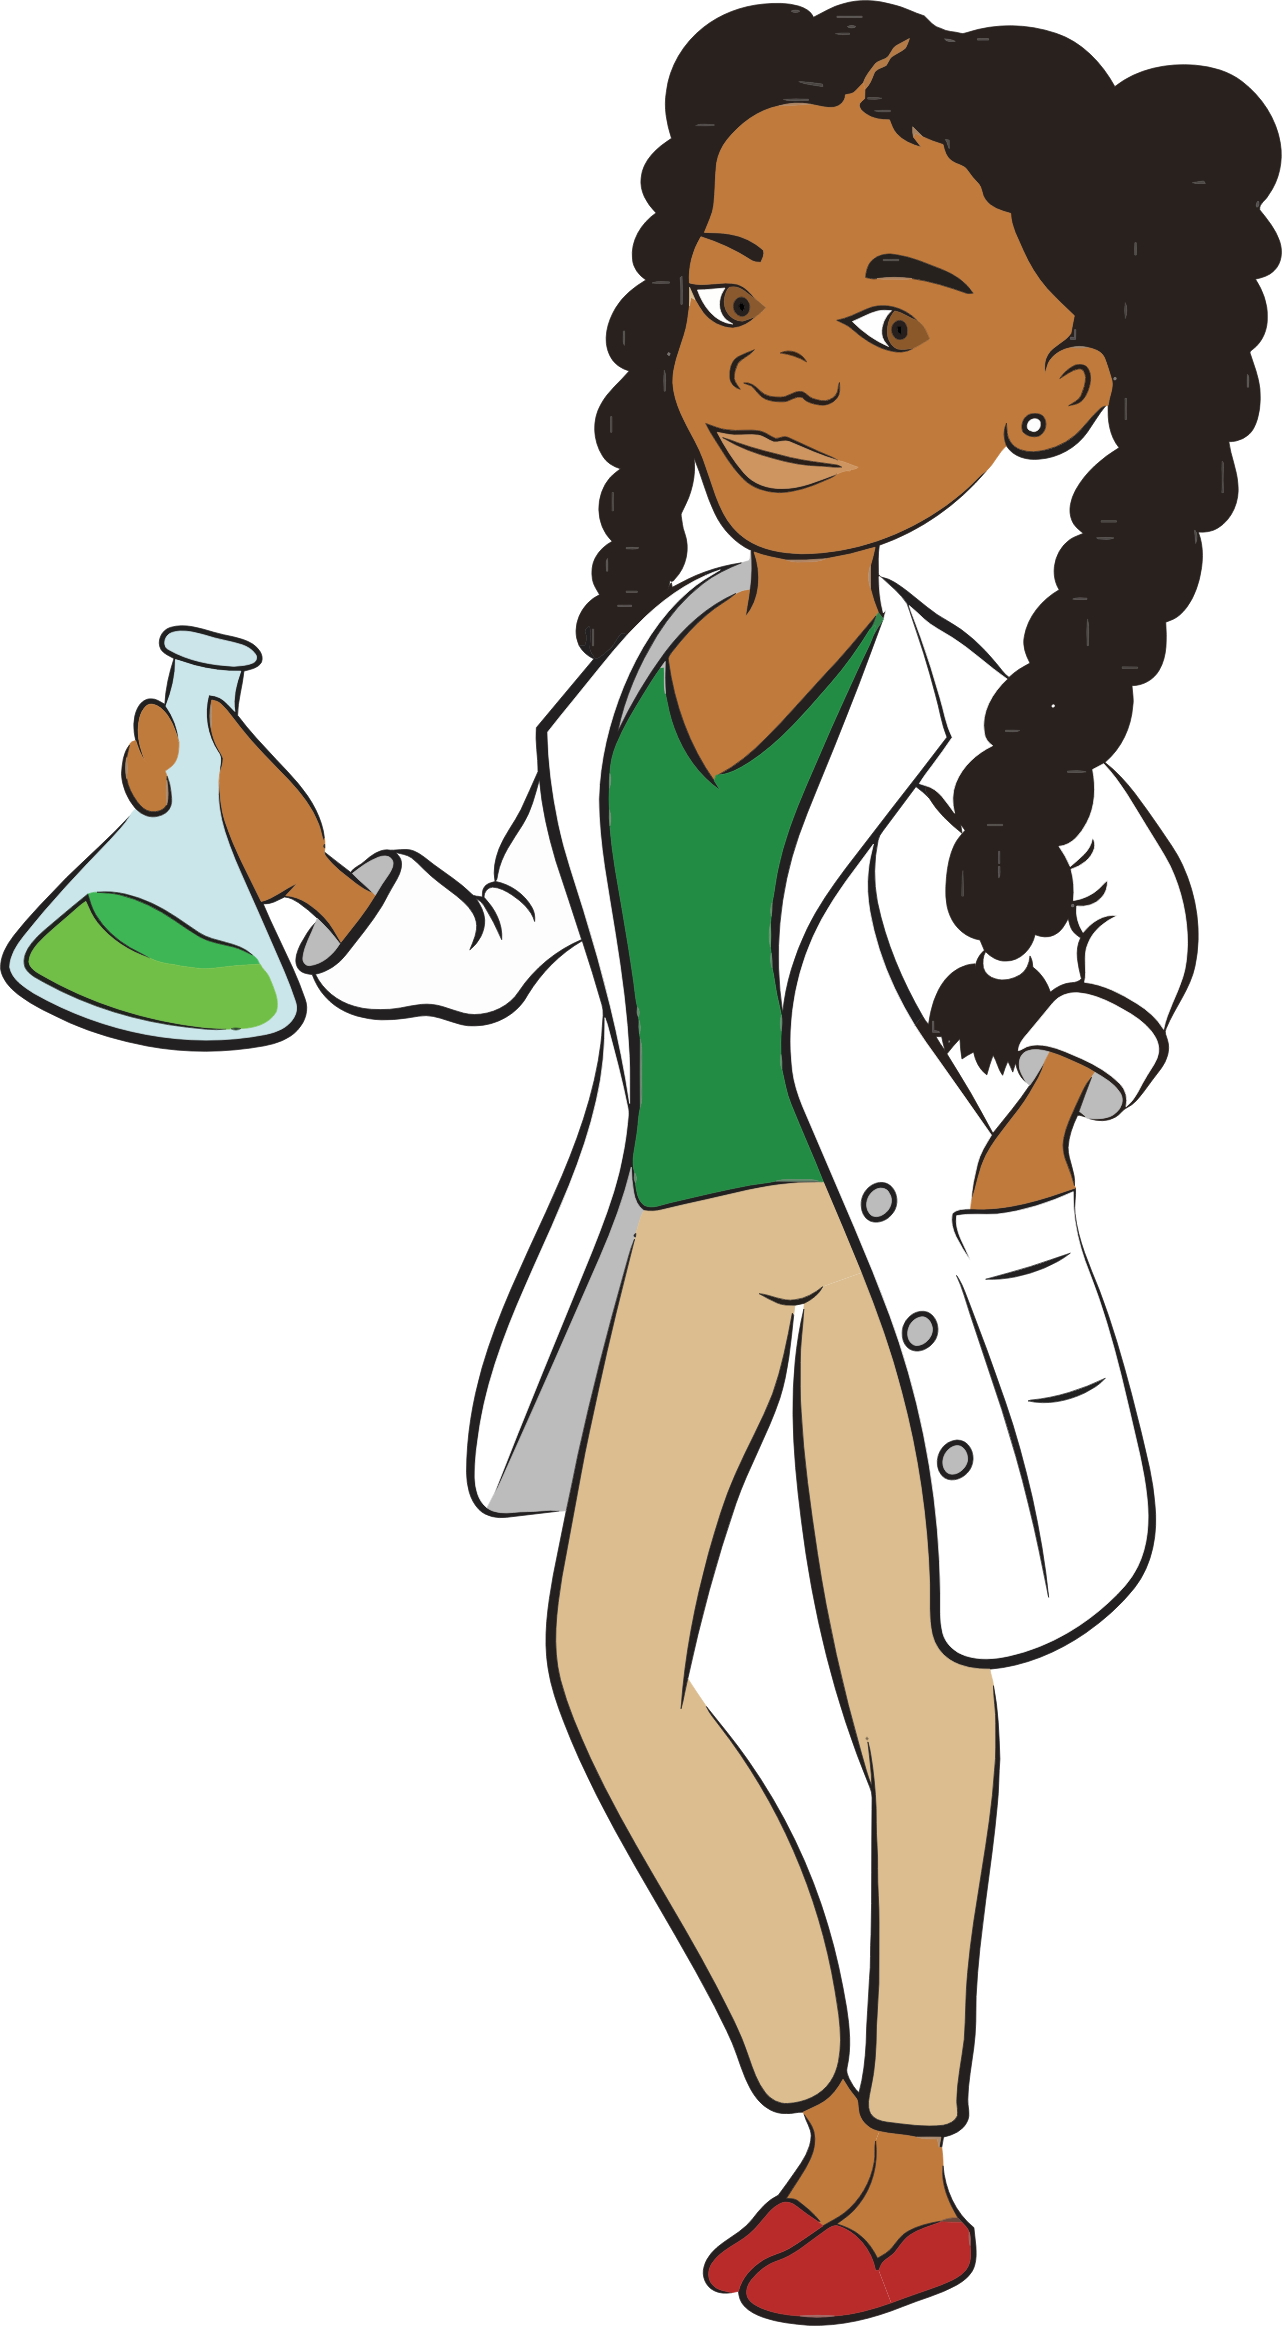 Female Scientist Cartoon Holding Flask